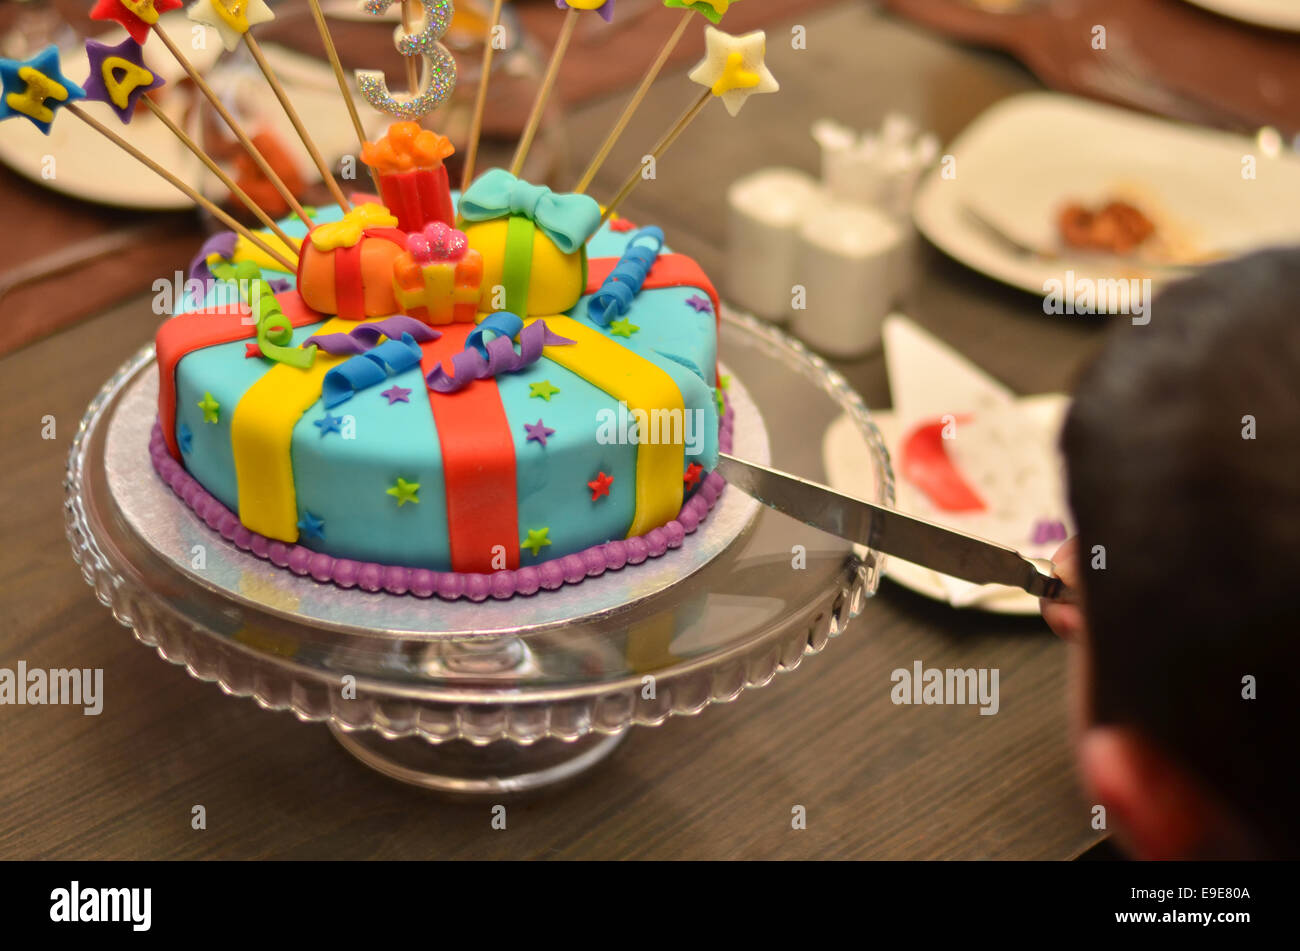 Cutting the birthday cake! Stock Photo